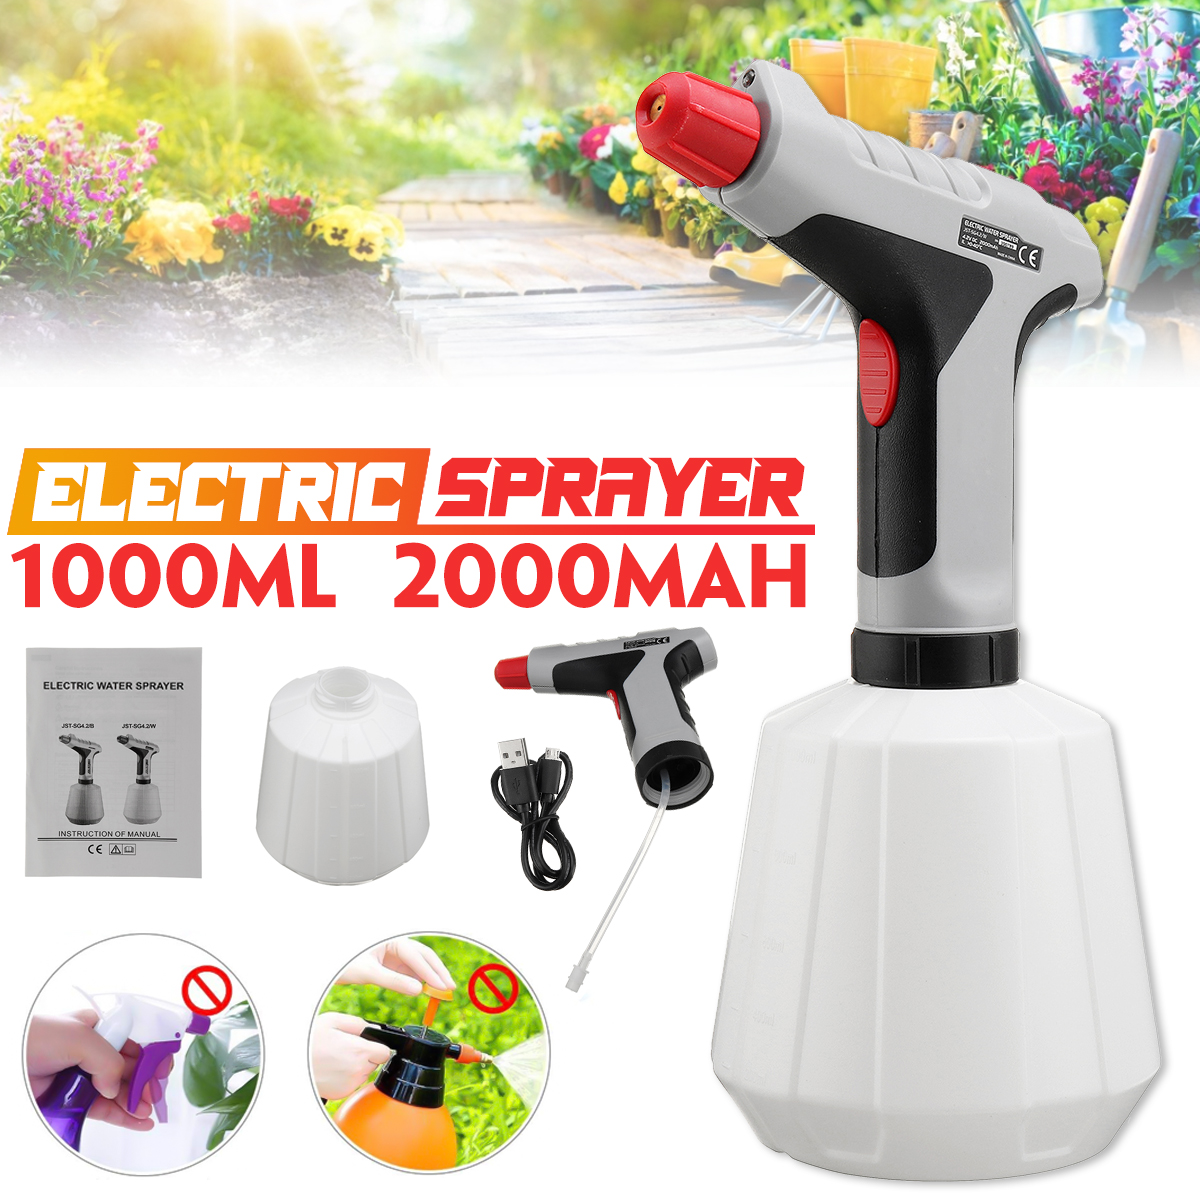 1000ml-Electric-Paint-Sprayer-Household-Flower-Grass-Water-Sprayer-2000mAh-USB-Rechargeable-Sprayer-1879562-1